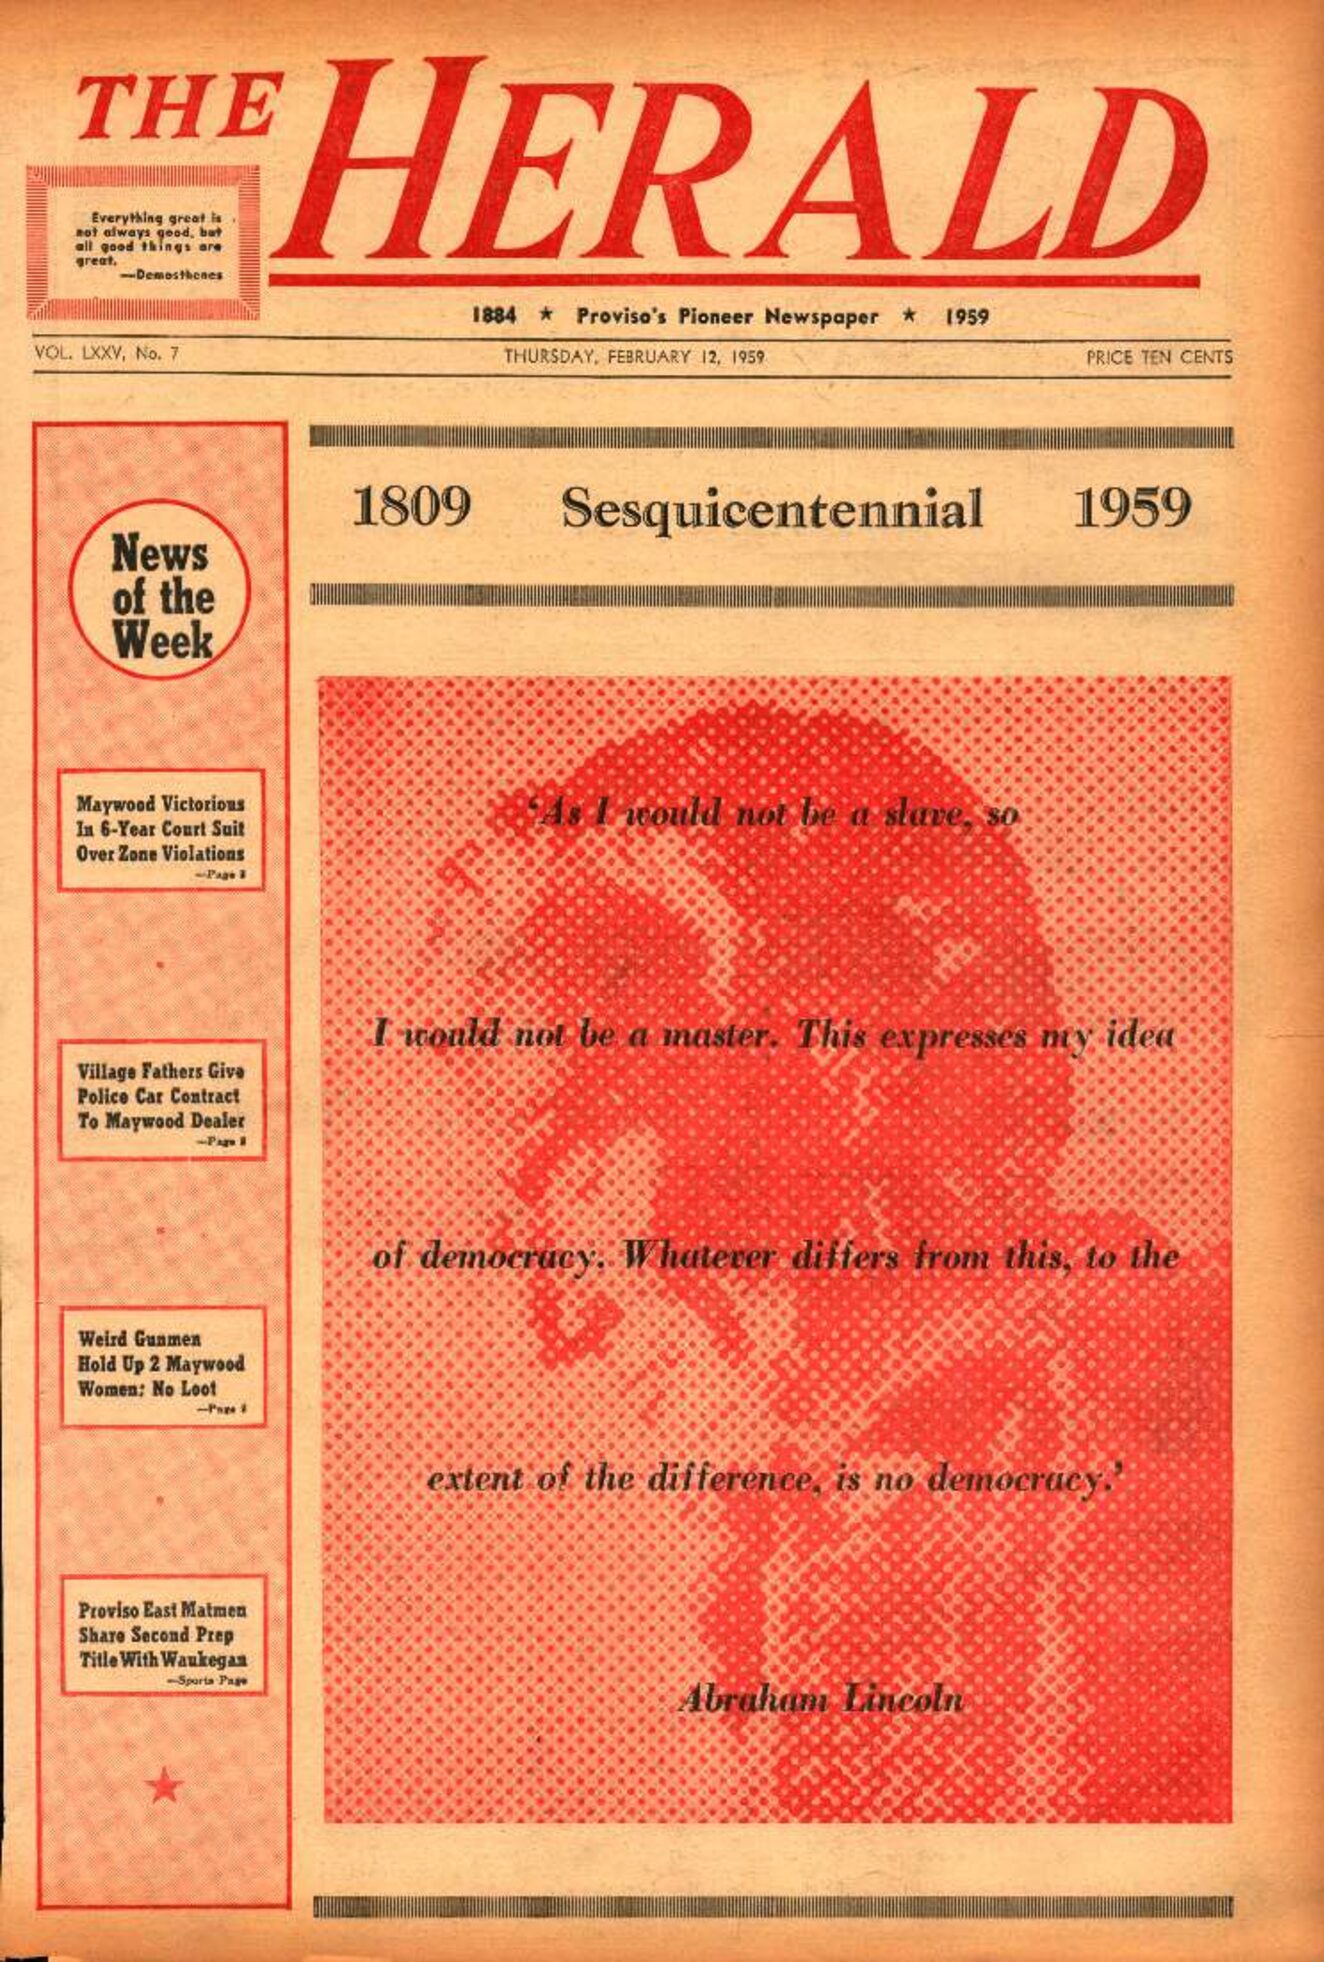 The Herald – 19590212